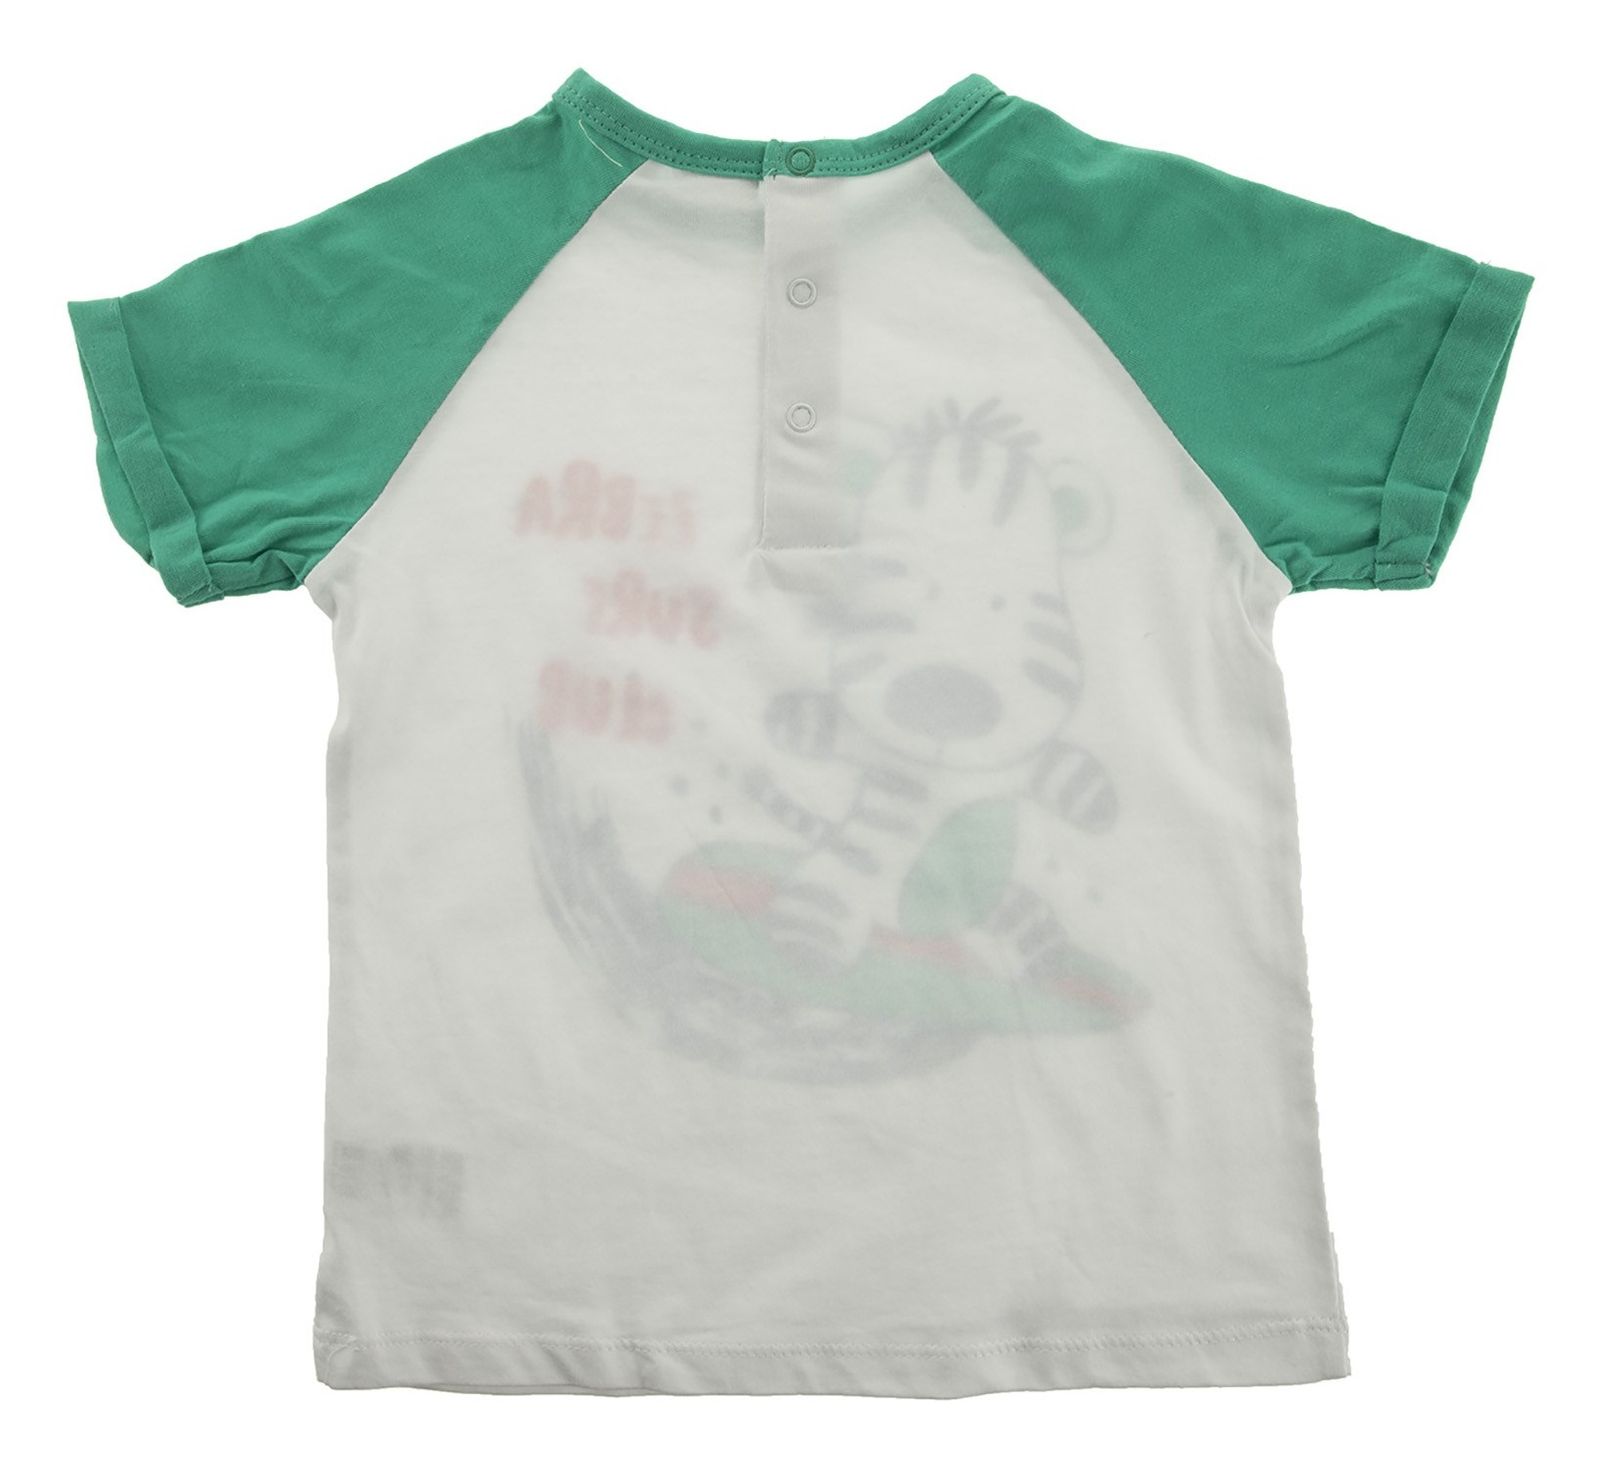 تی شرت و شلوارک نخی نوزادی بسته 2 عددی - بلوکیدز - سفيد/سبز - 12